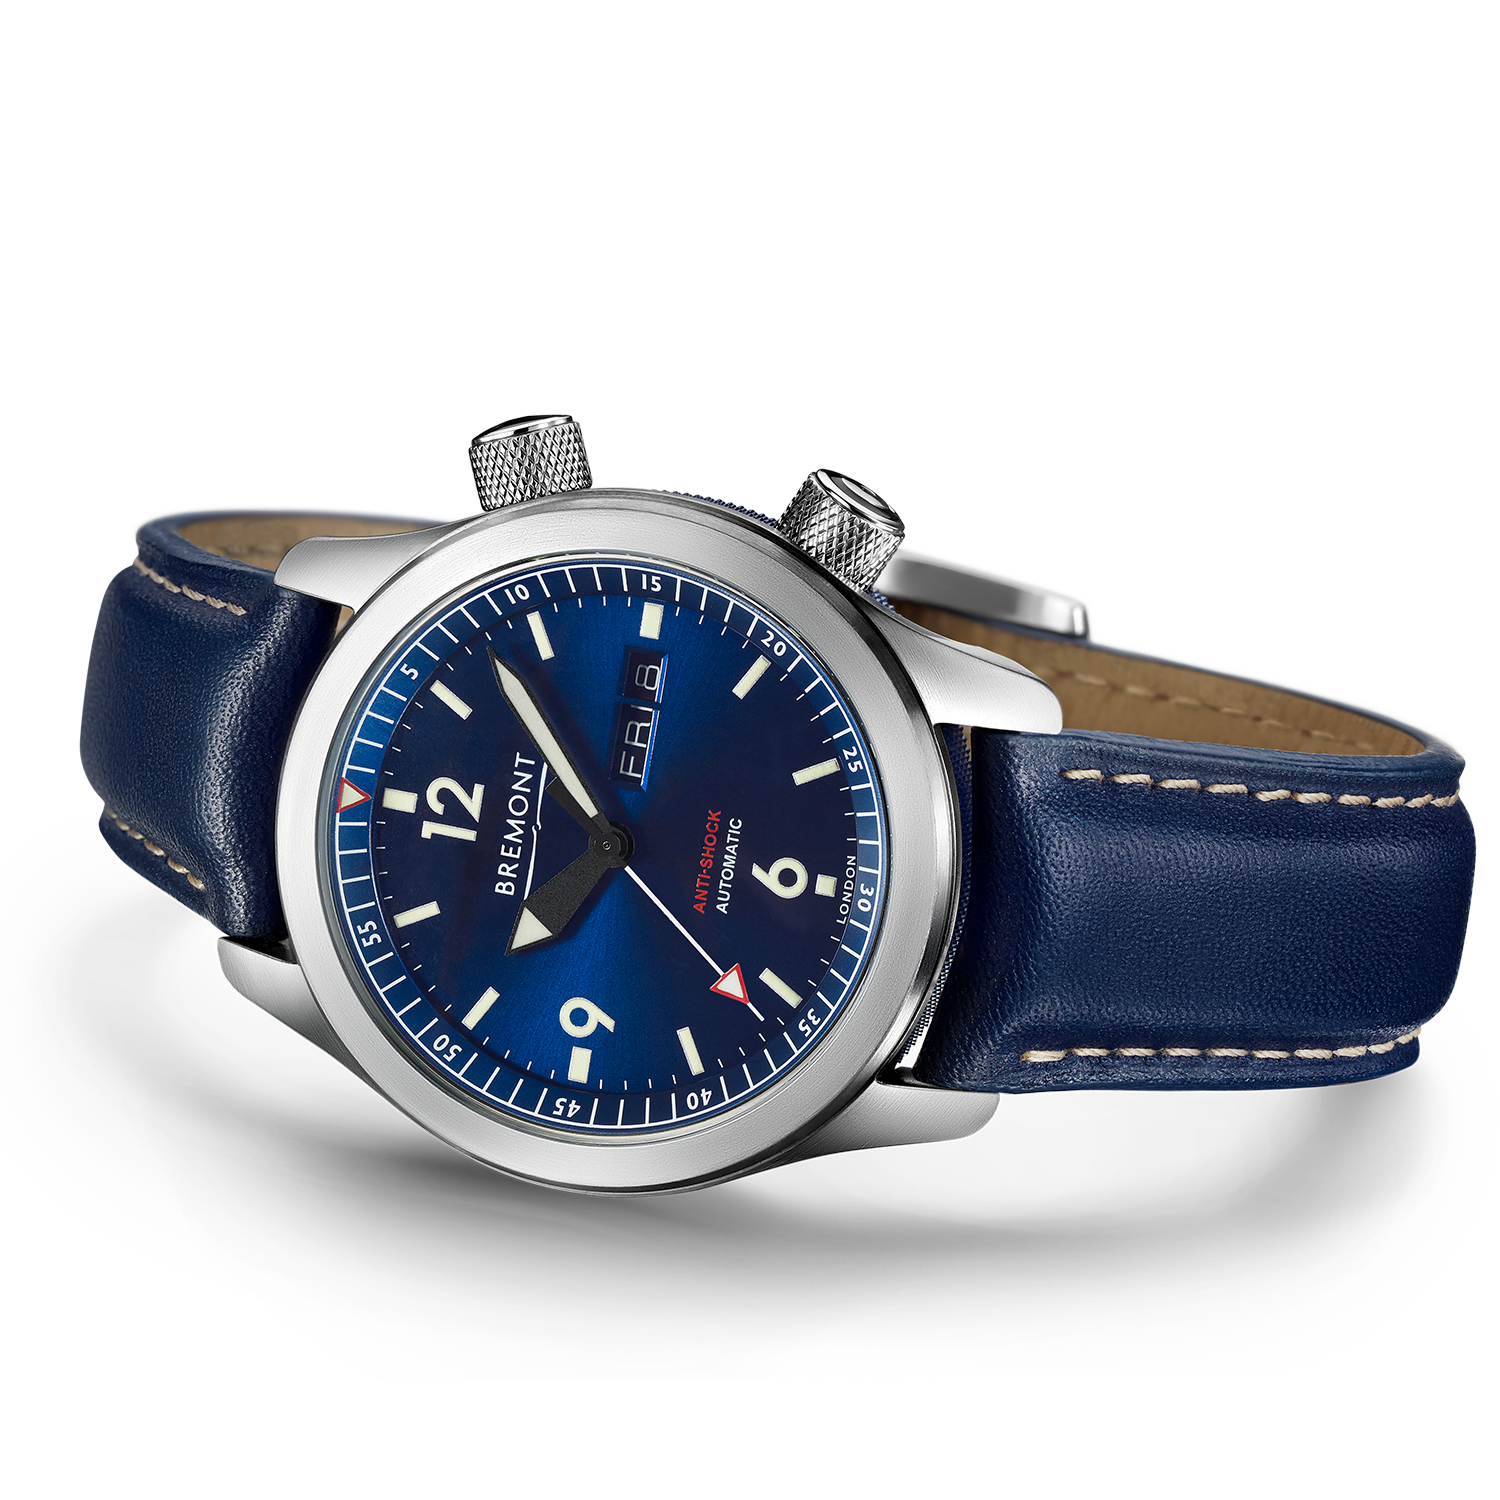 U-2 Blue Pilot's Watch